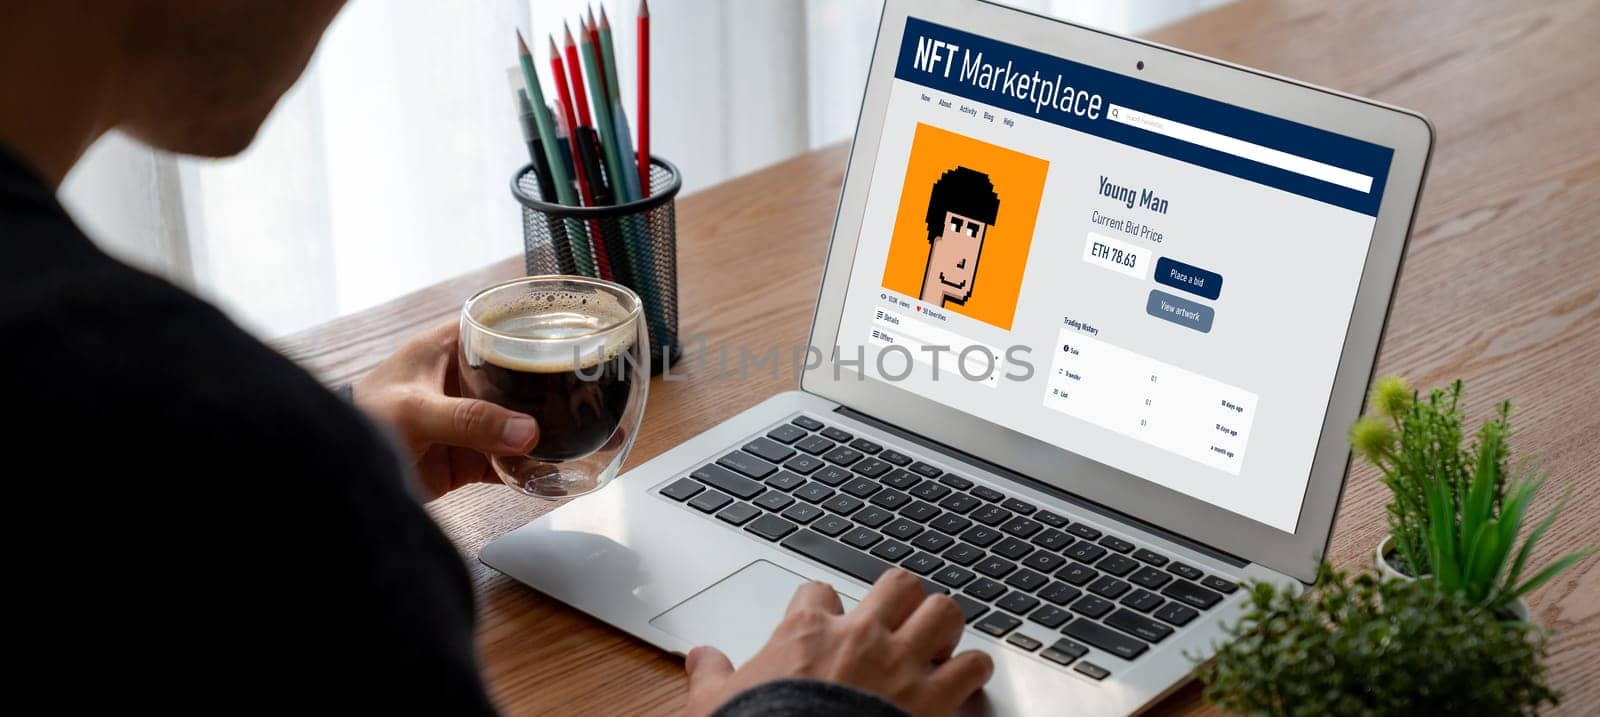 NFT marketplace provide modish sale channel for digital artist by biancoblue